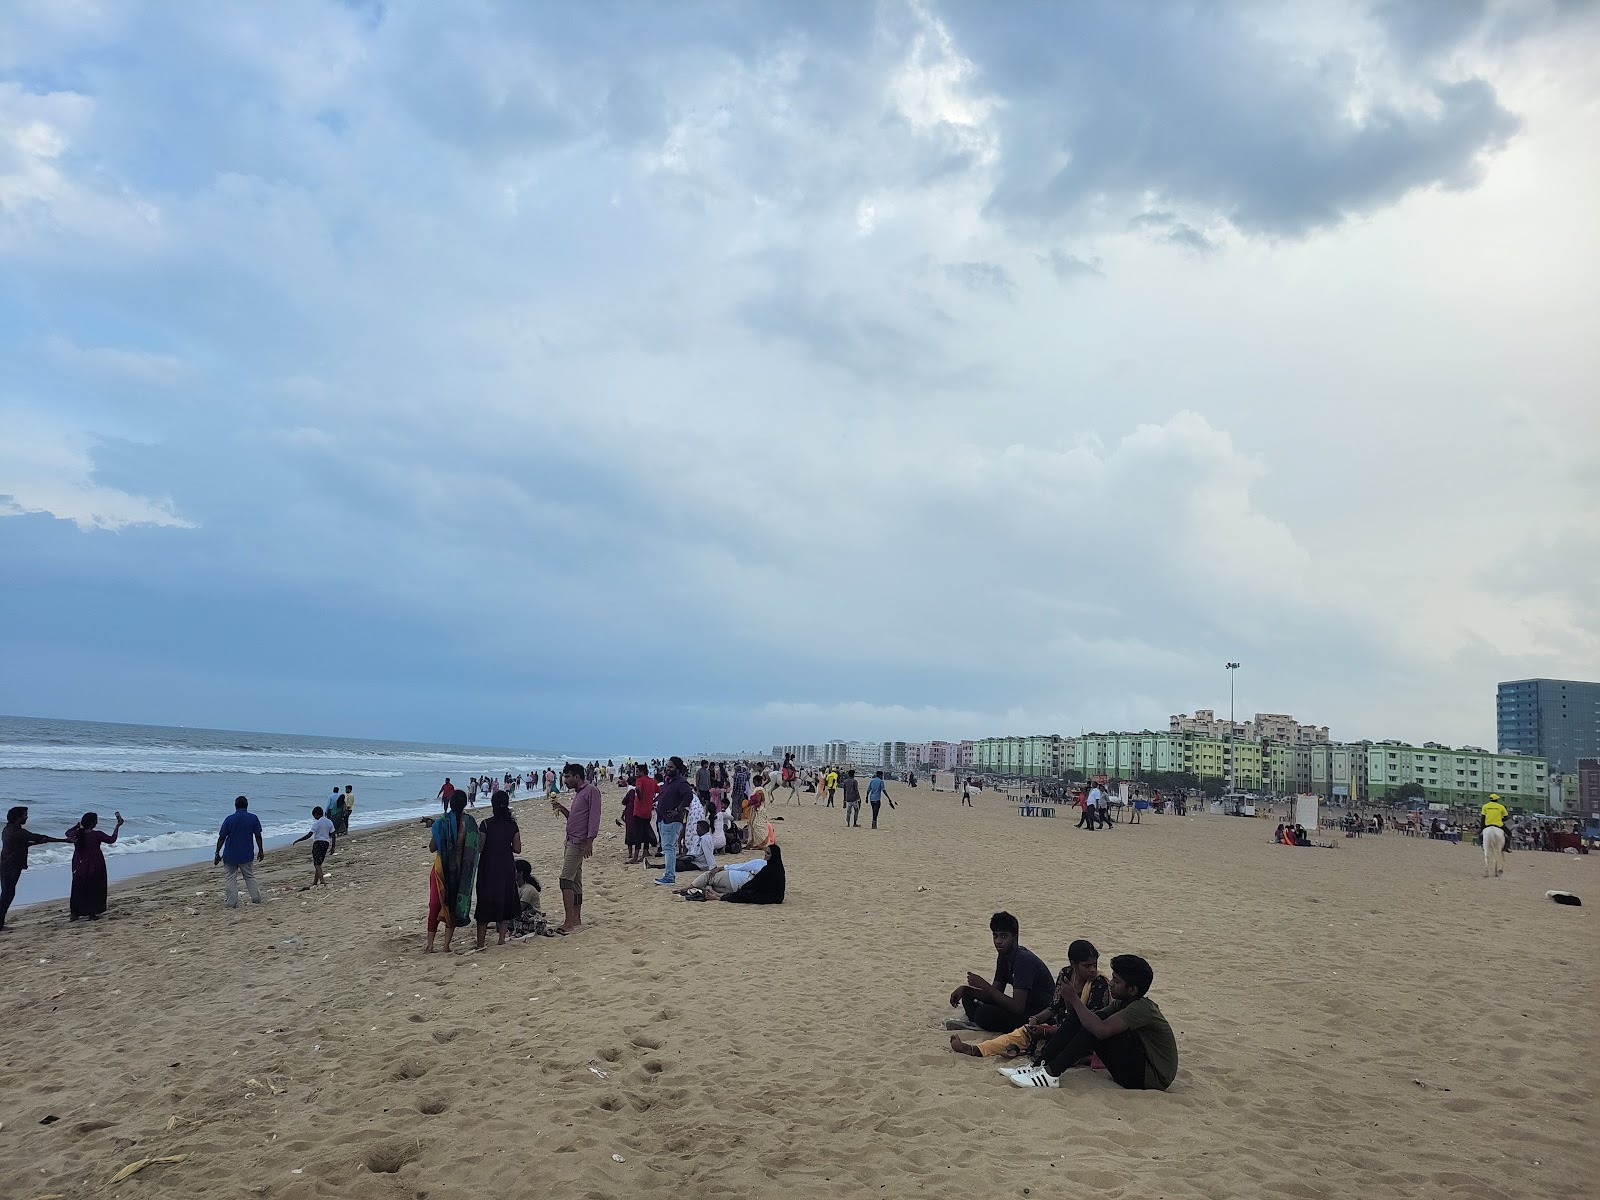 Foto di Gandhi Beach con una superficie del sabbia luminosa